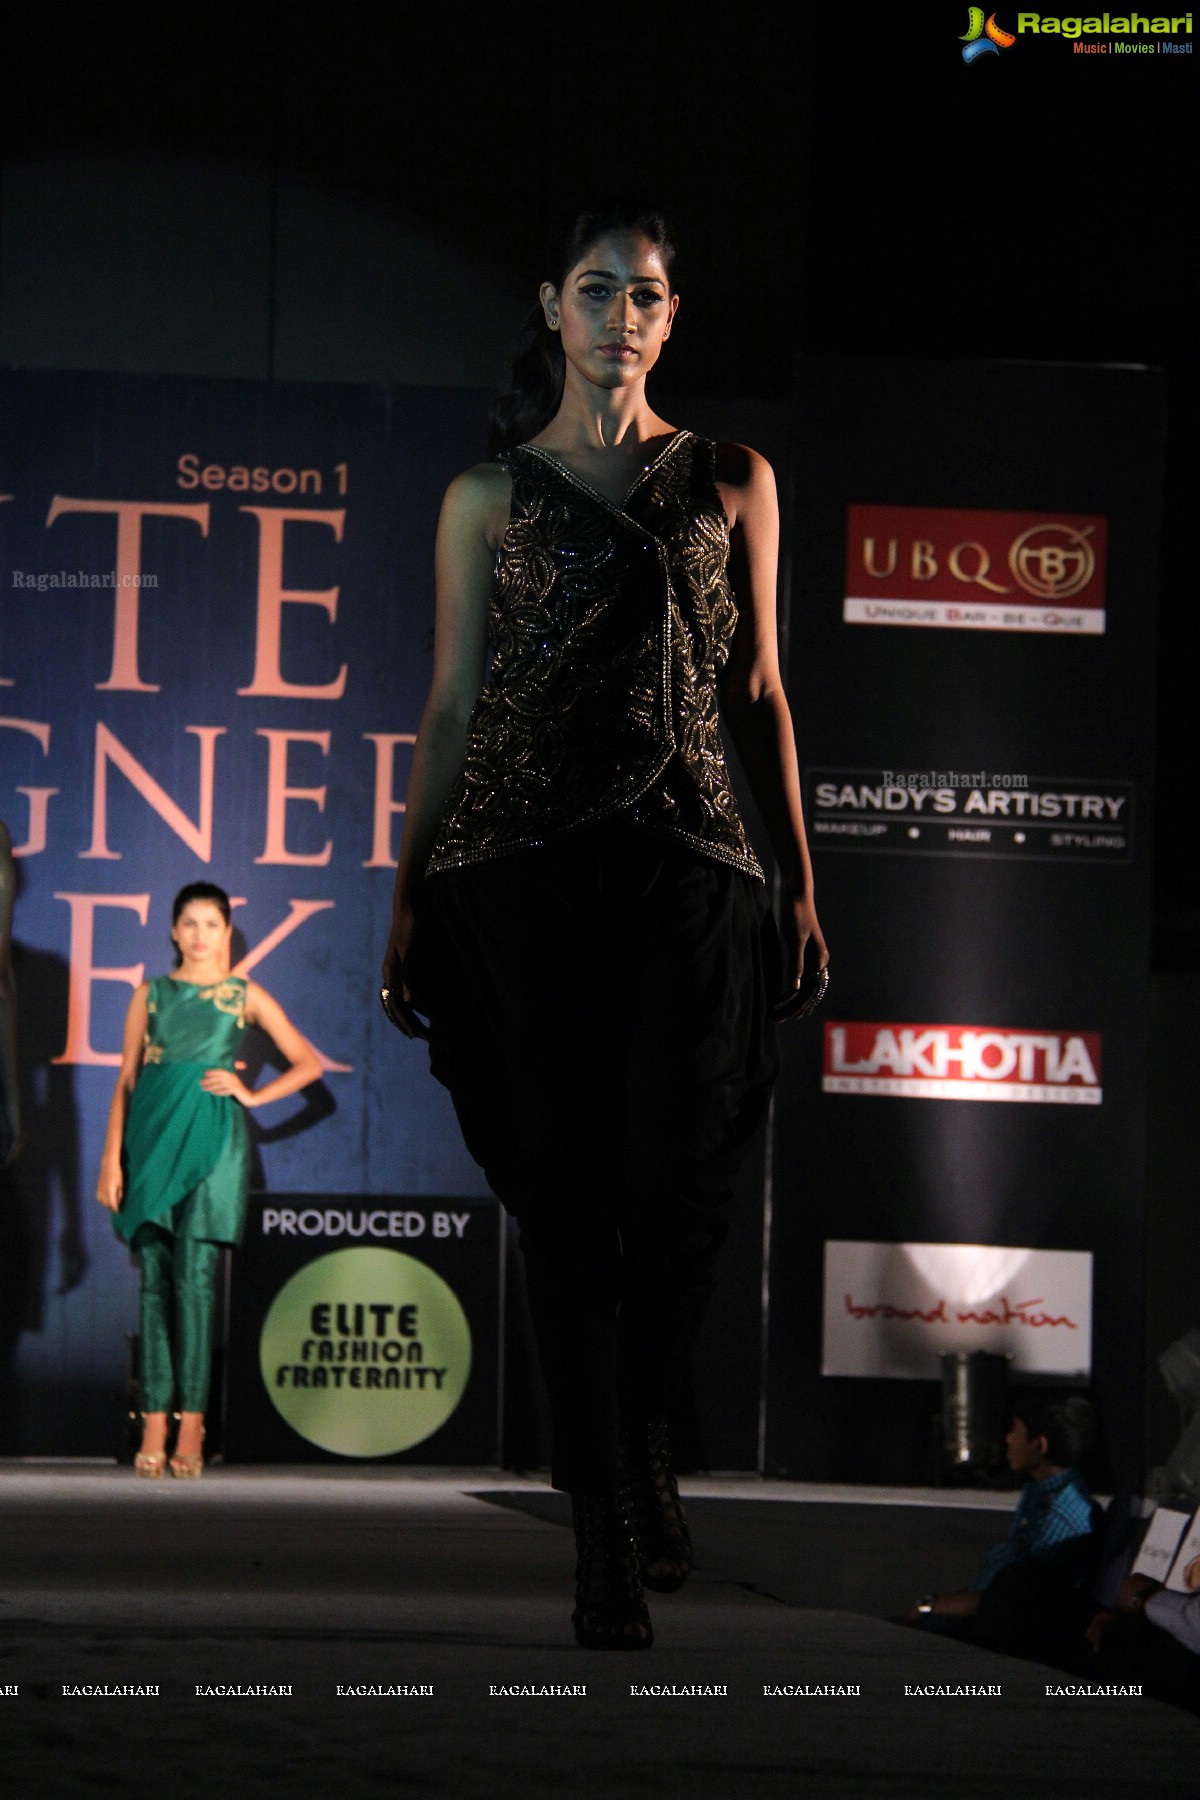 Elite Designer Week Season 1, Hyderabad